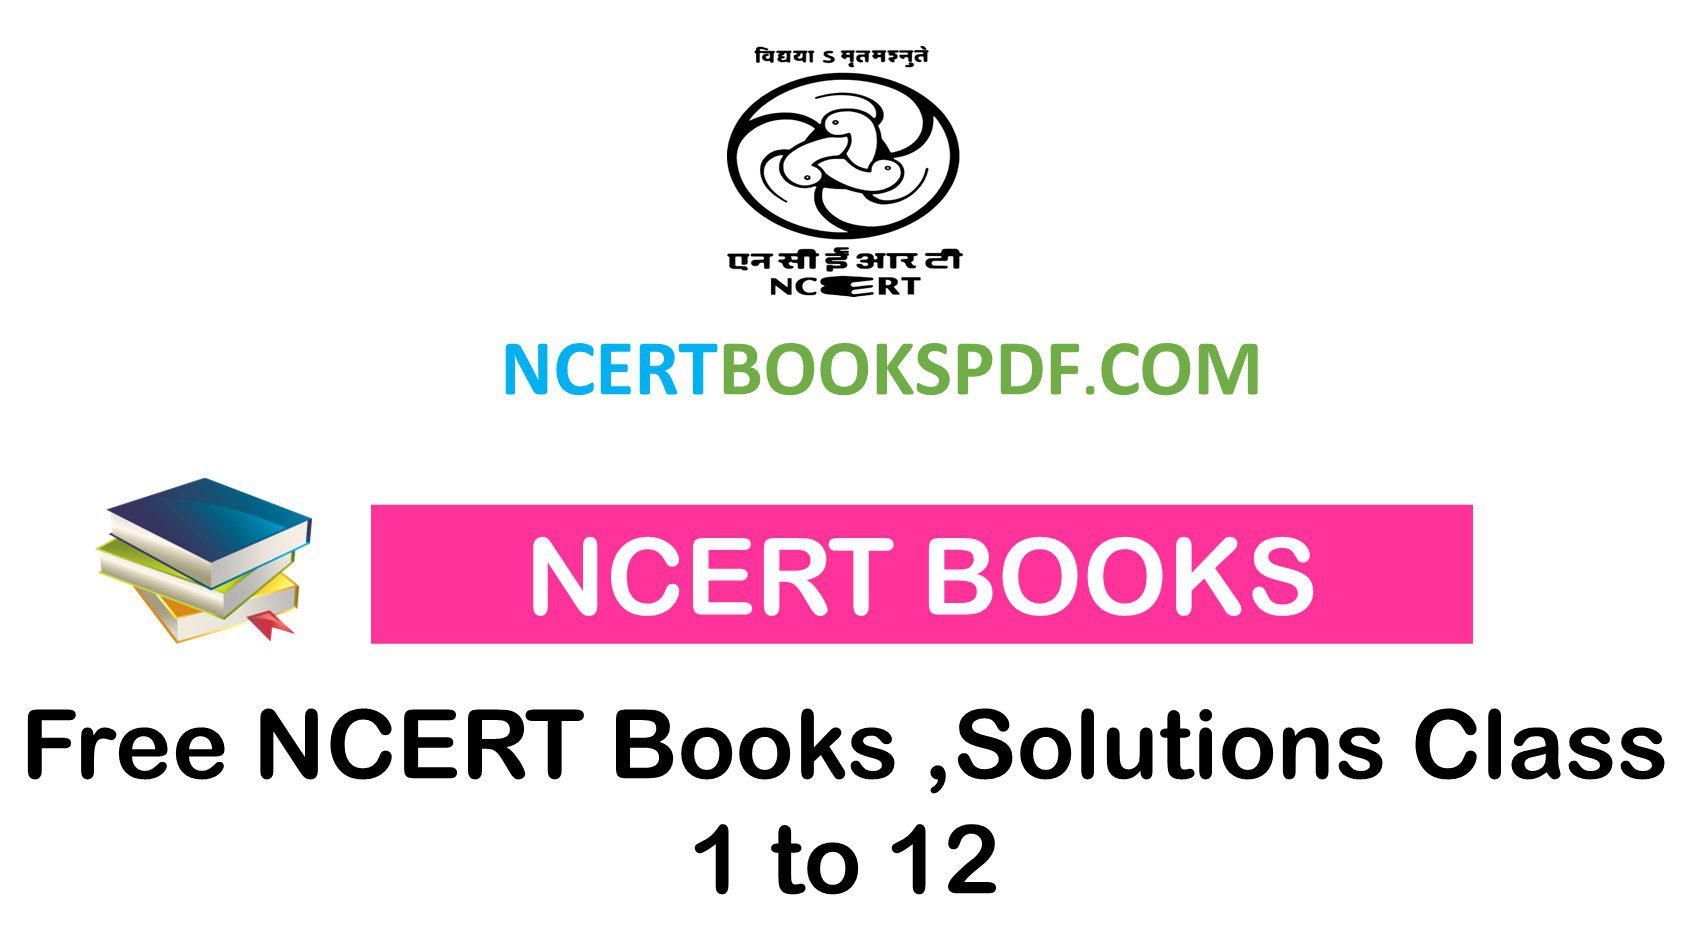 NCERT BOOKS PDF SOLUTIONS